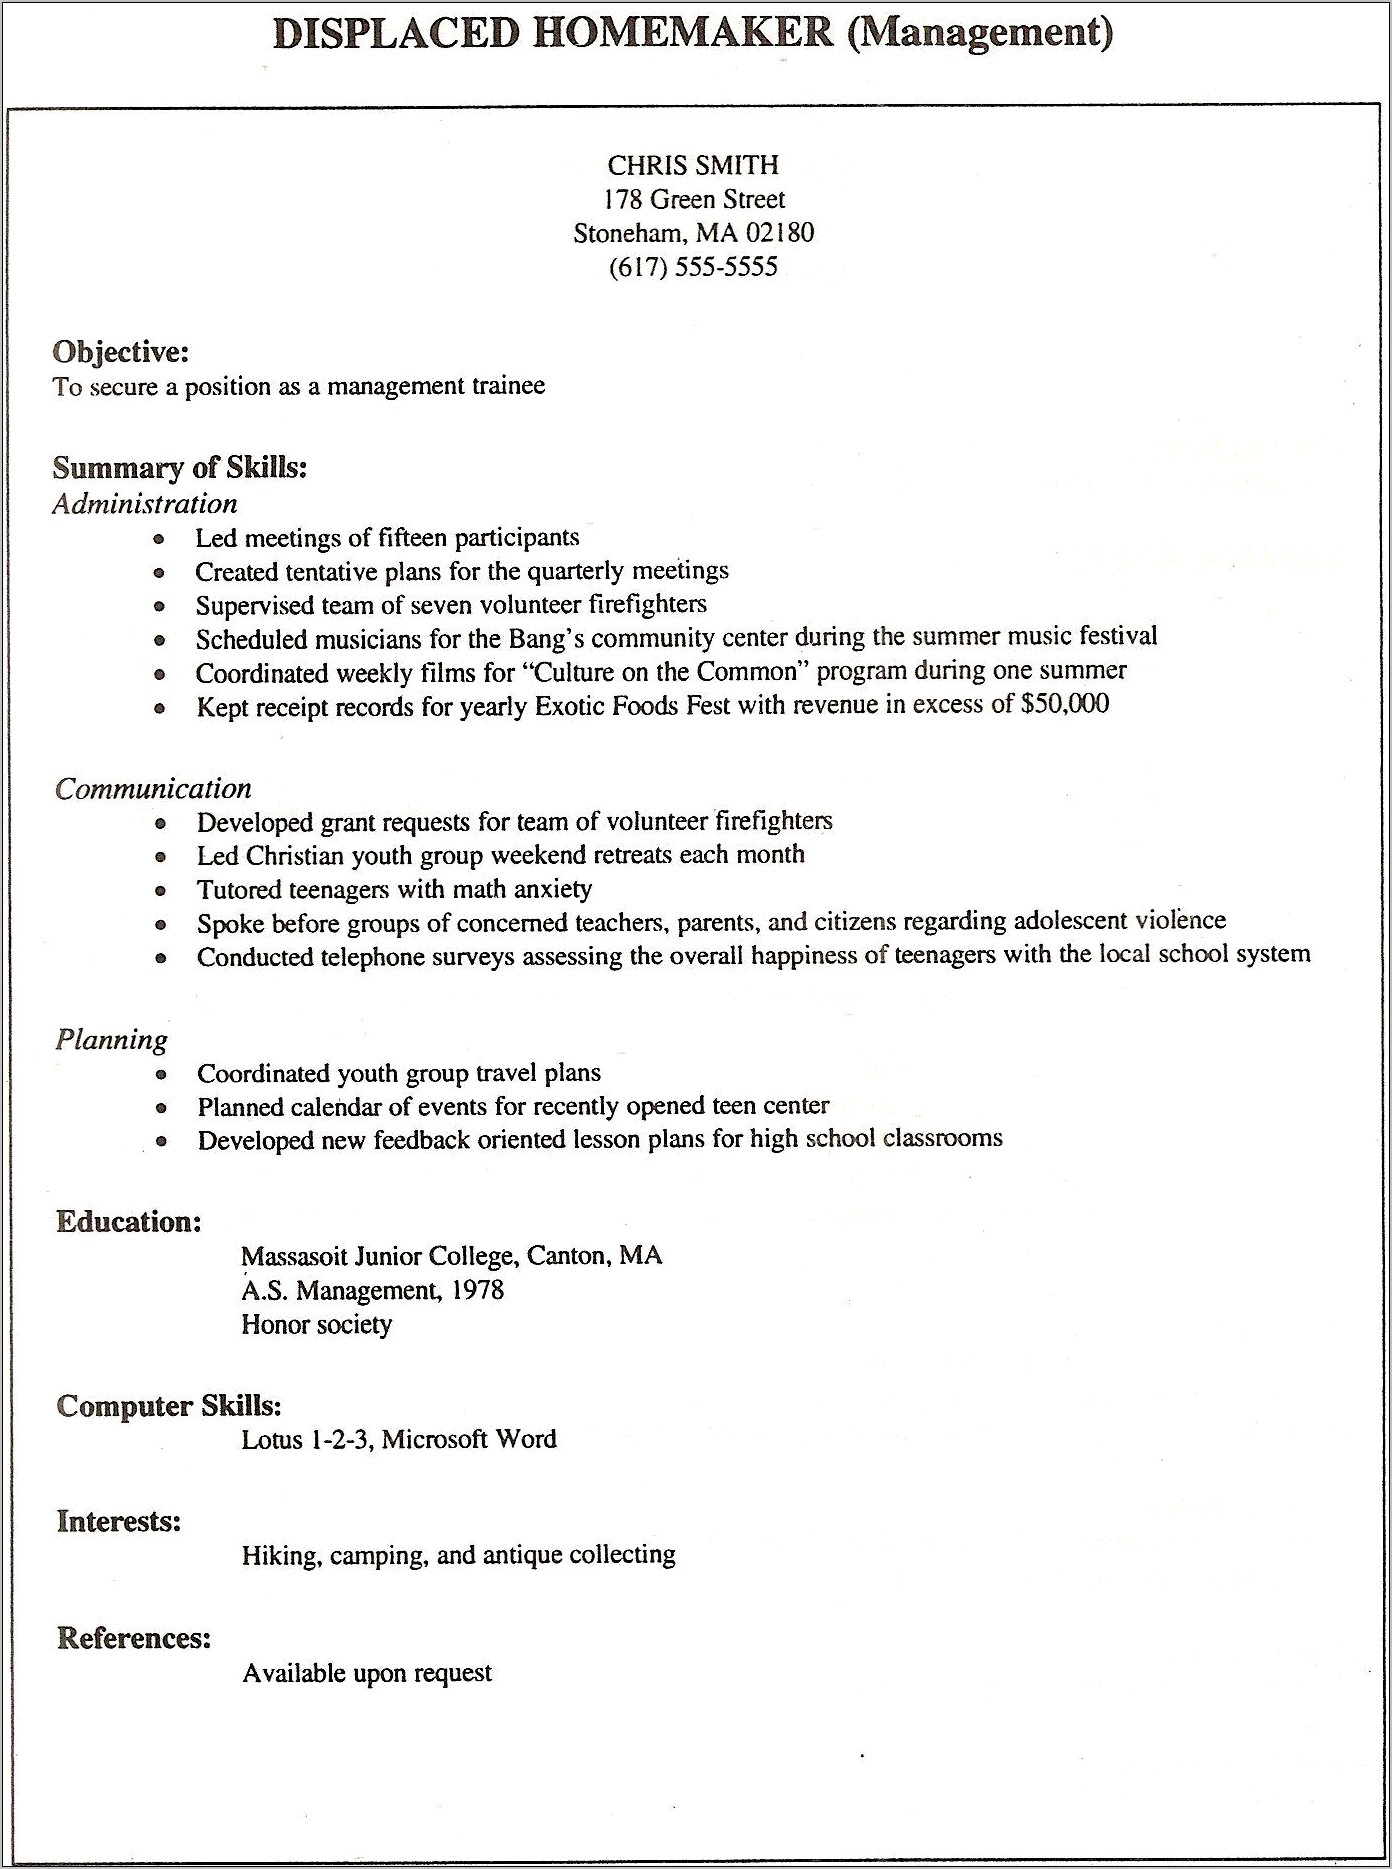 Home Health Aide Job Summary For Resume